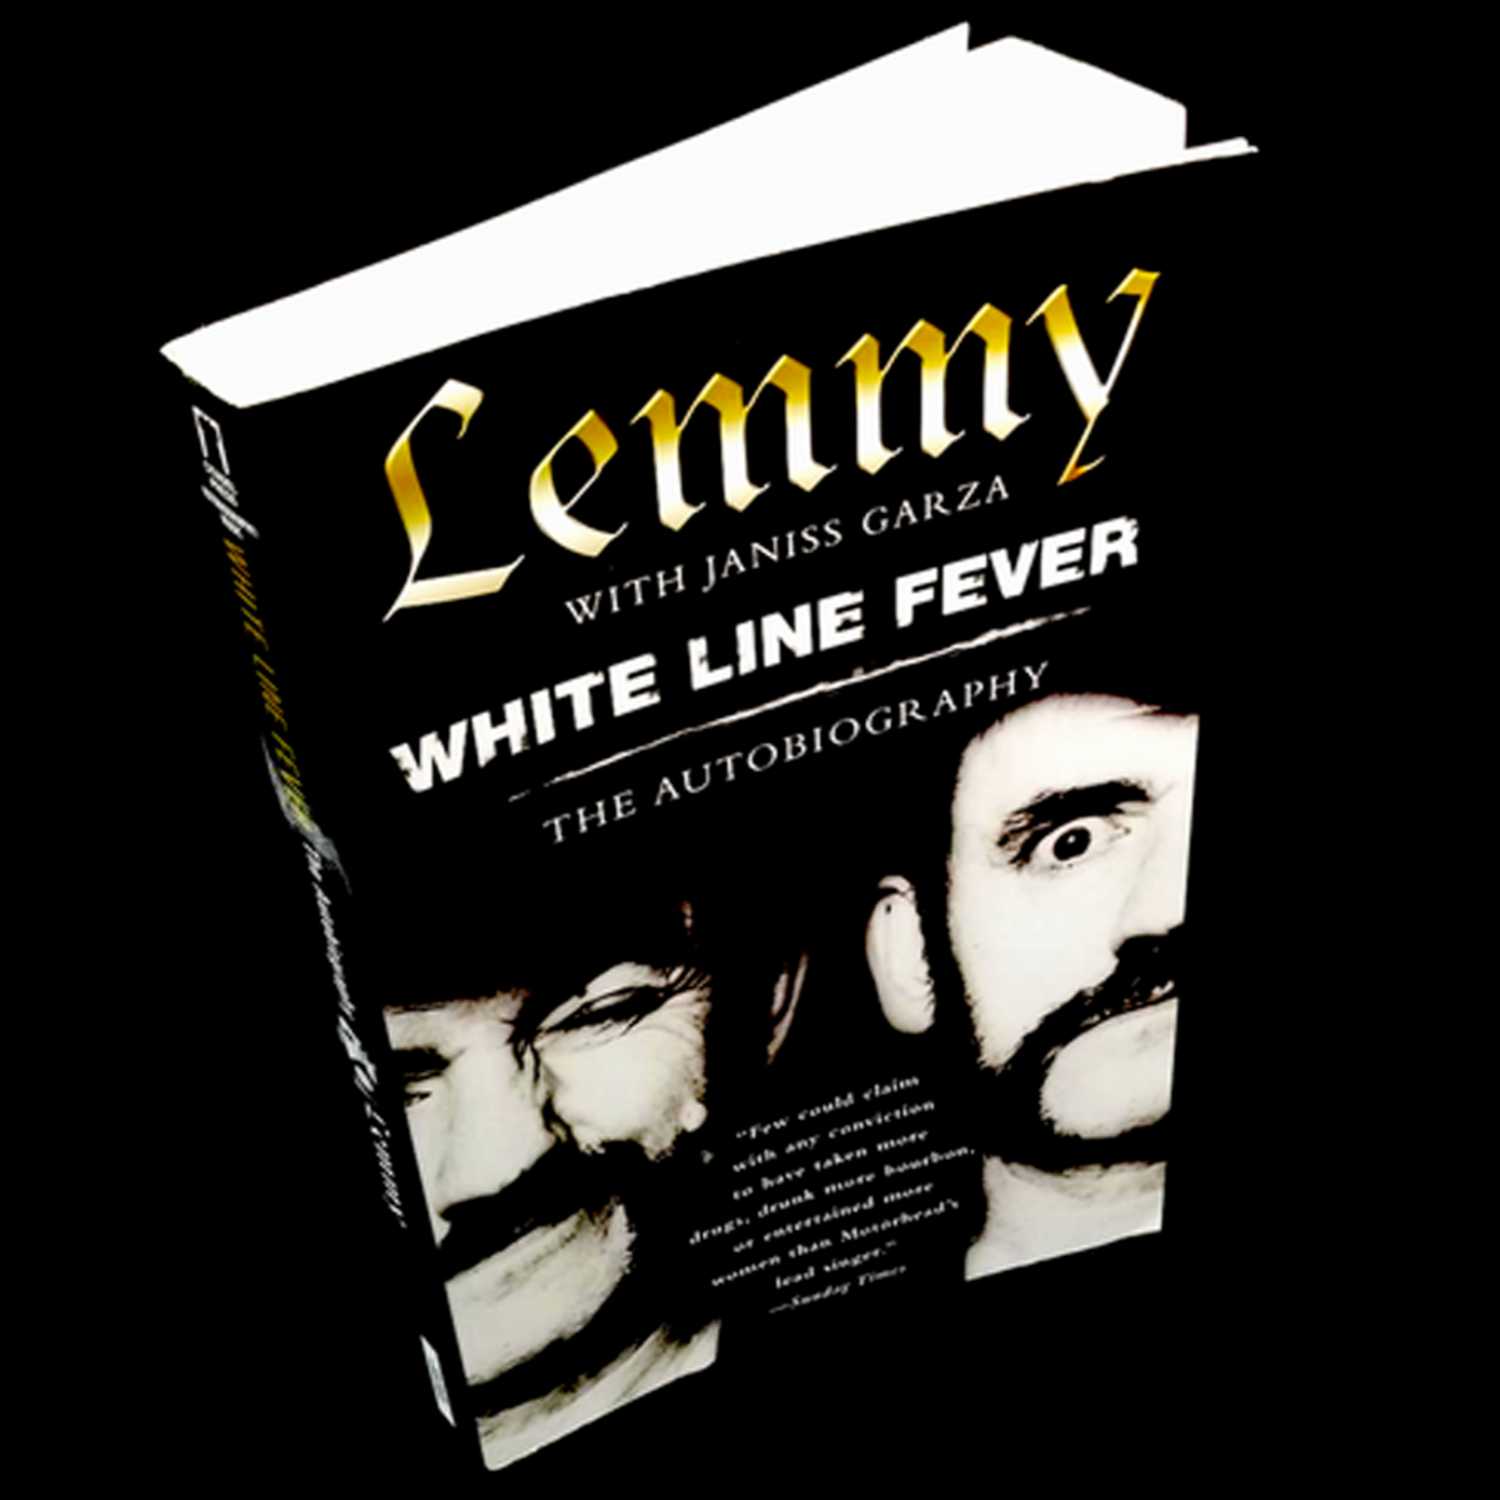 Janiss Garza: Co-Author, "Lemmy: White Line Fever"